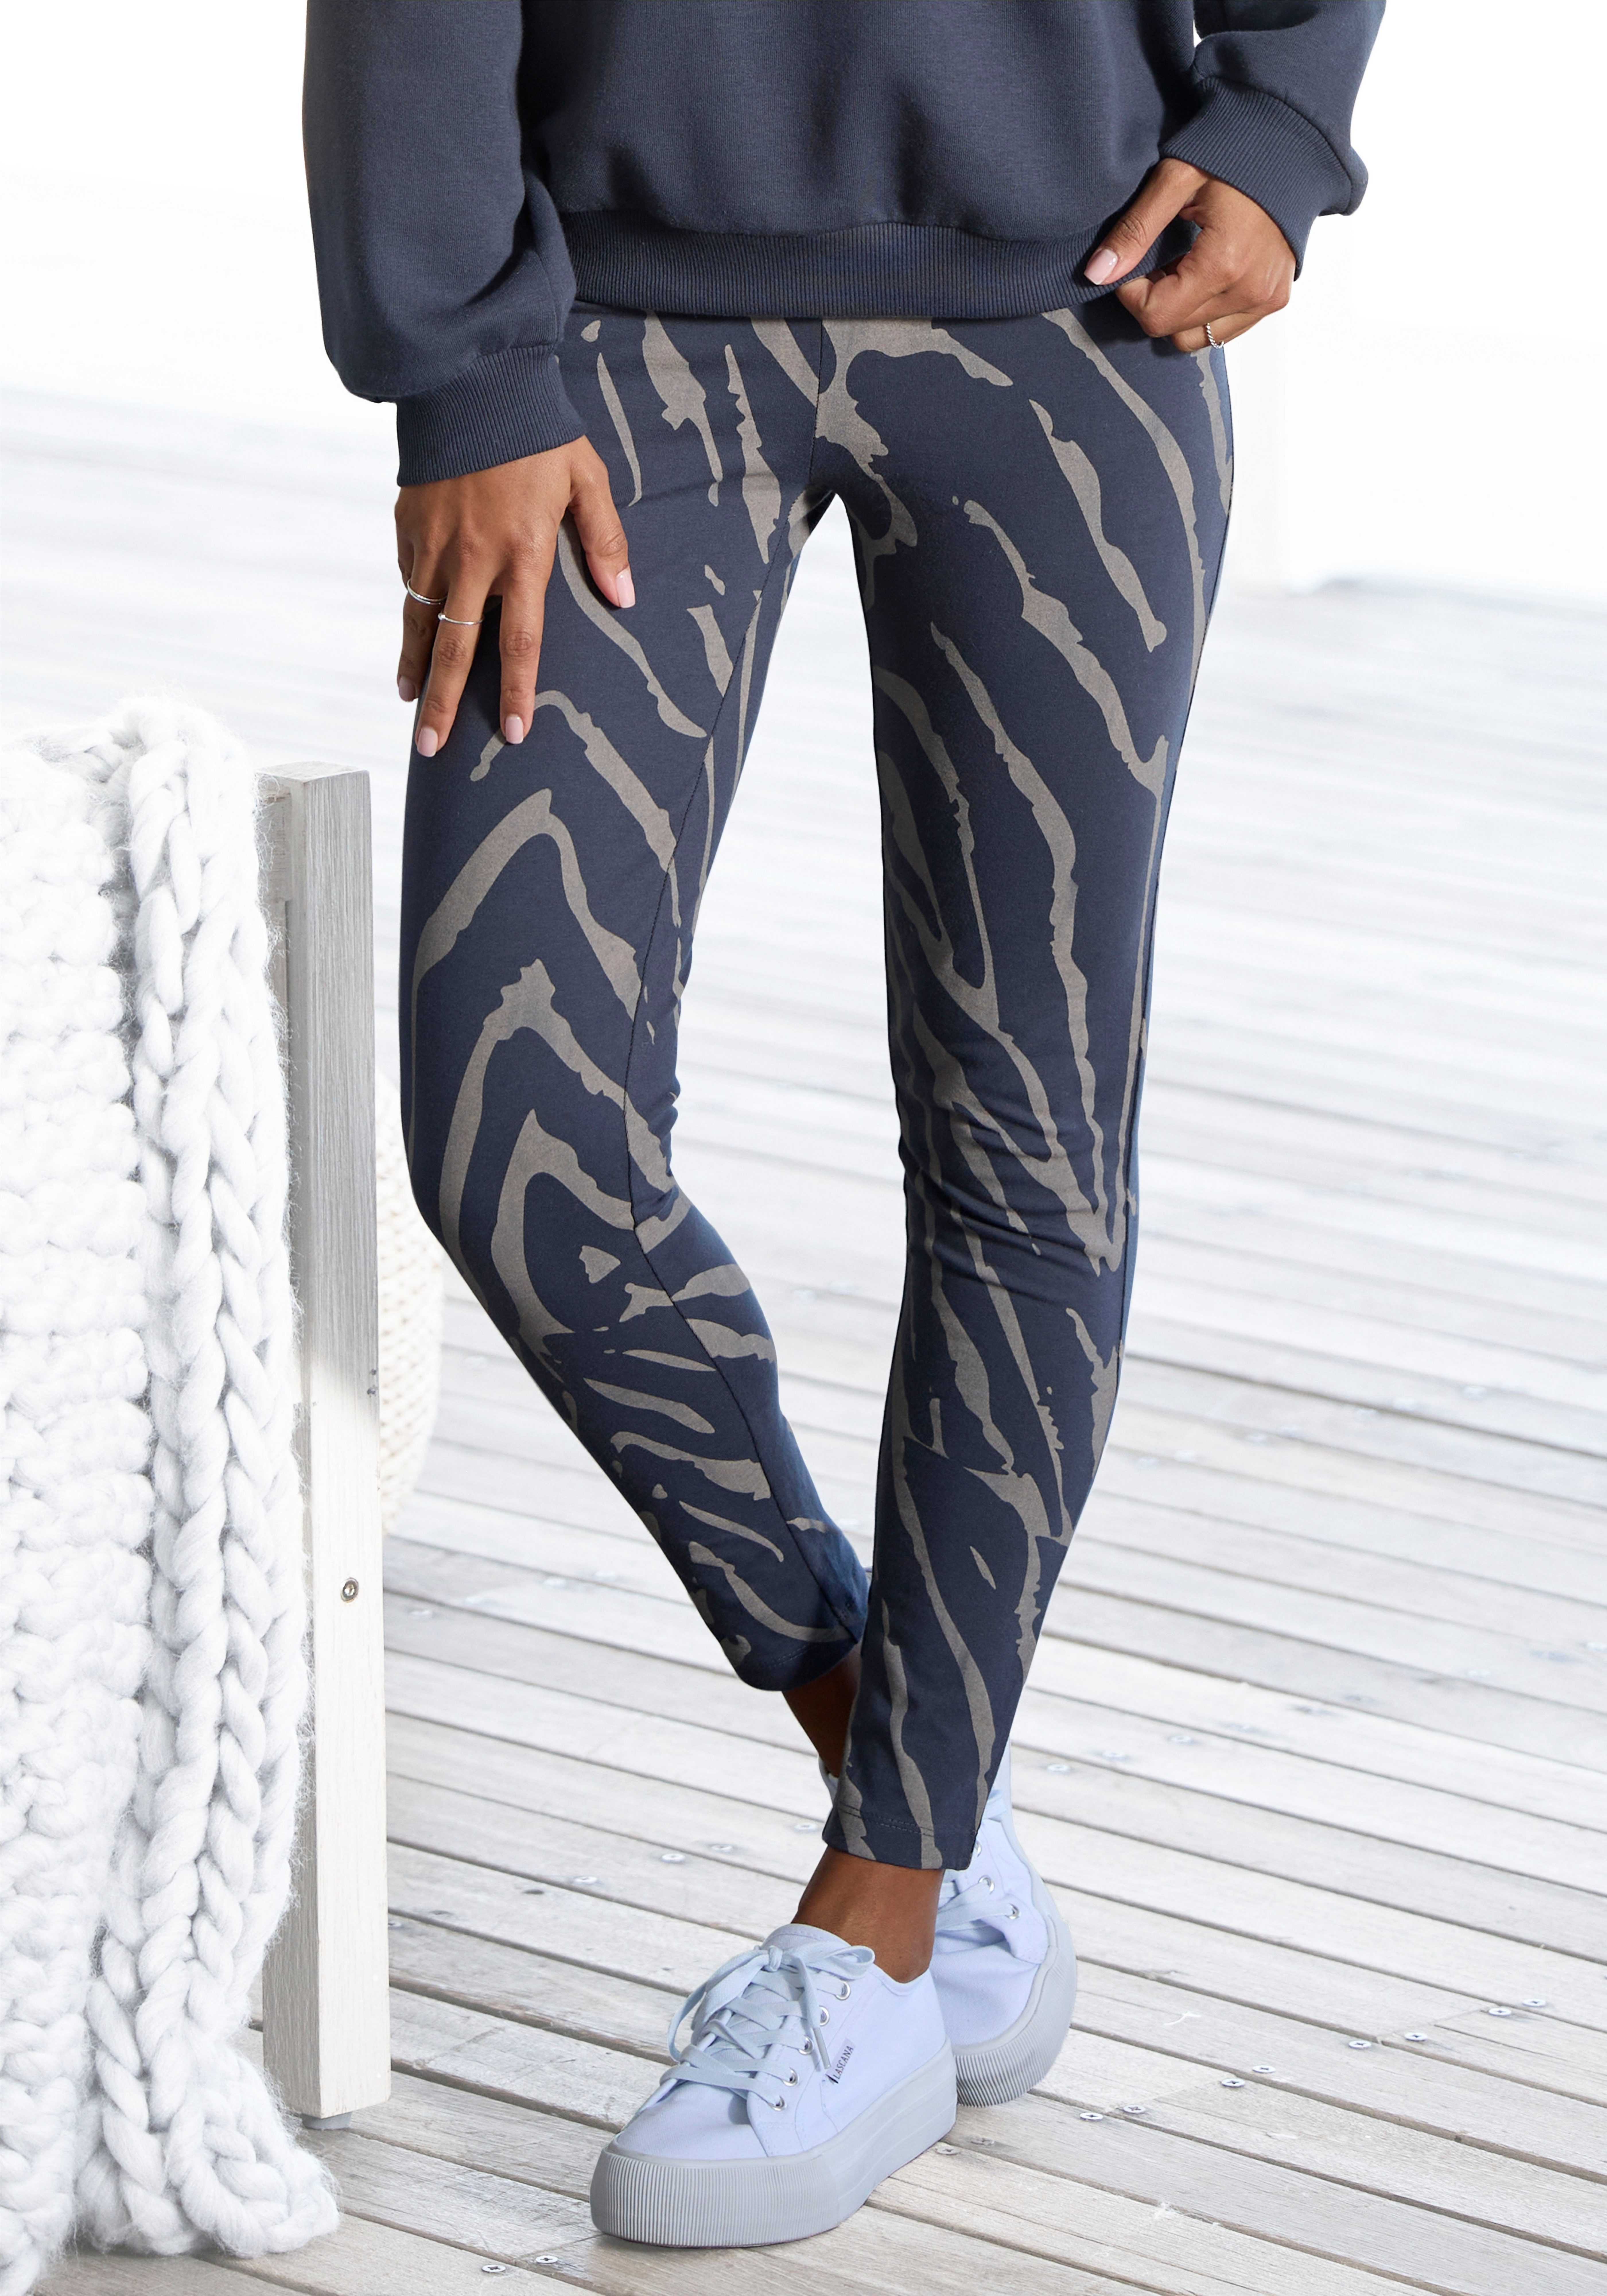 LASCANA Leggings -Loungehose mit Zebramuster und breitem Bund, Loungewear dunkelgrau-taupe